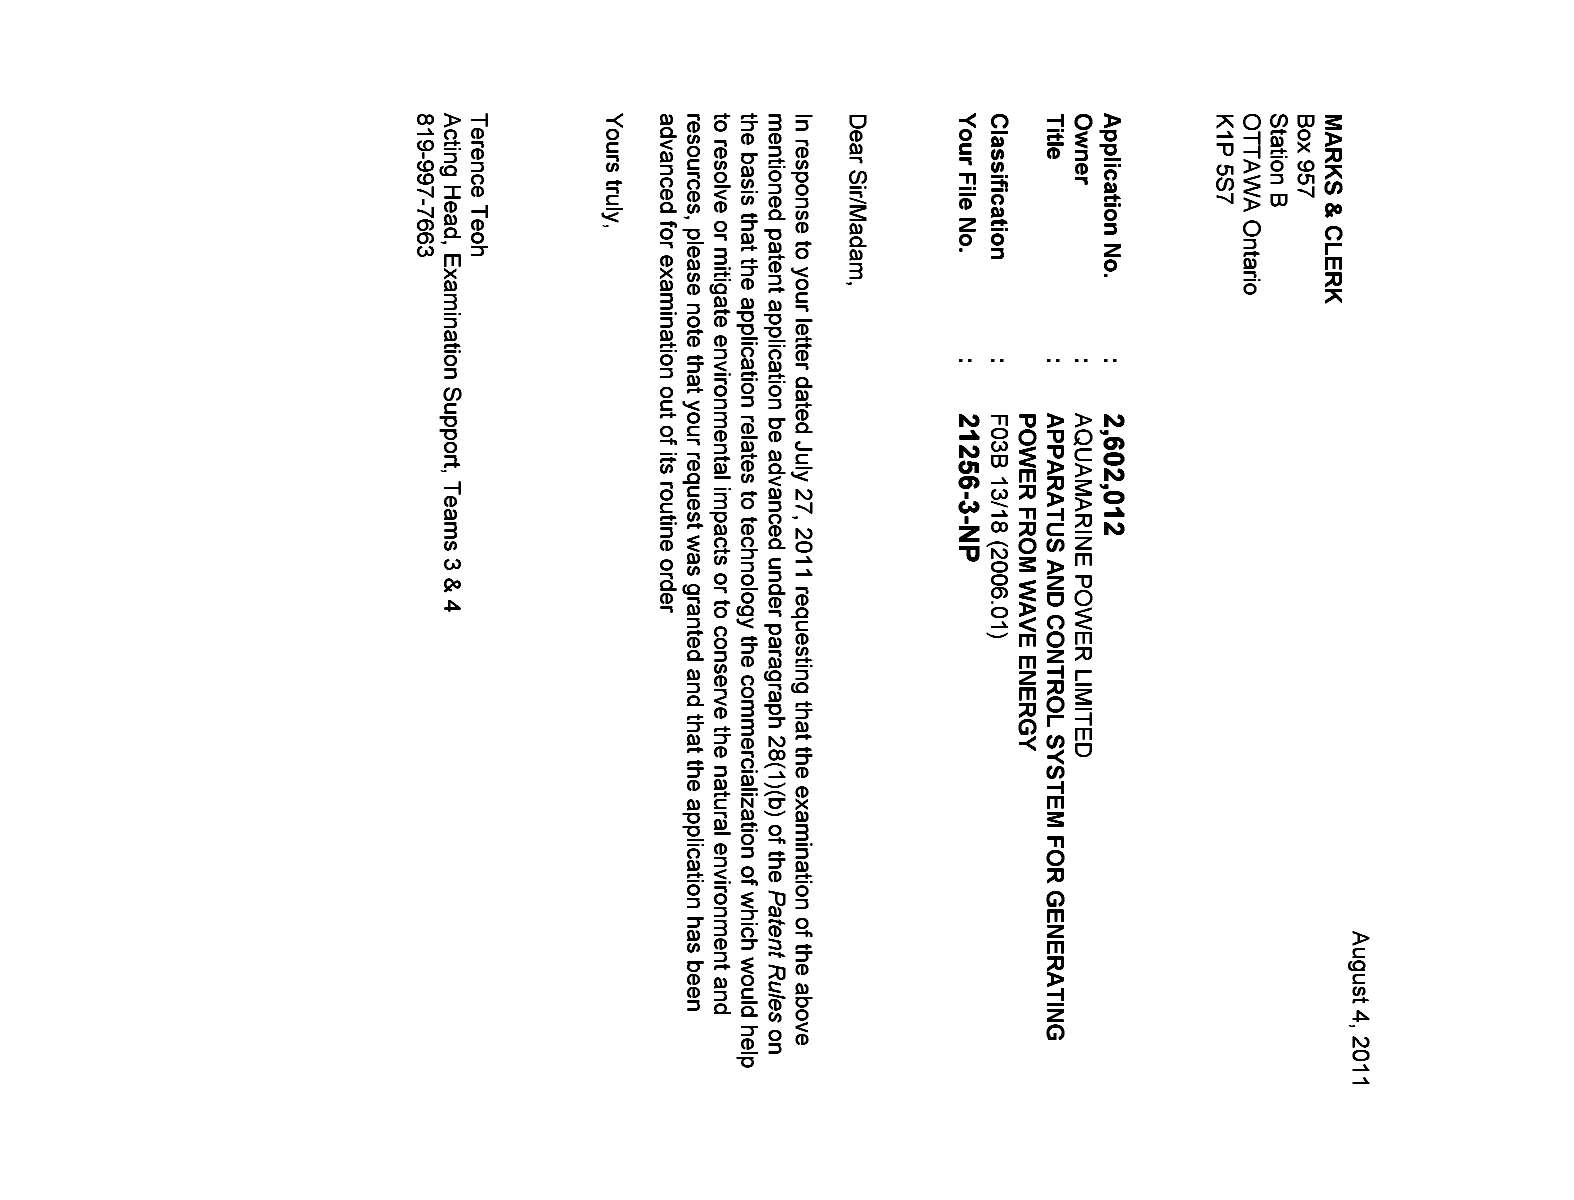 Canadian Patent Document 2602012. Prosecution-Amendment 20101204. Image 1 of 1